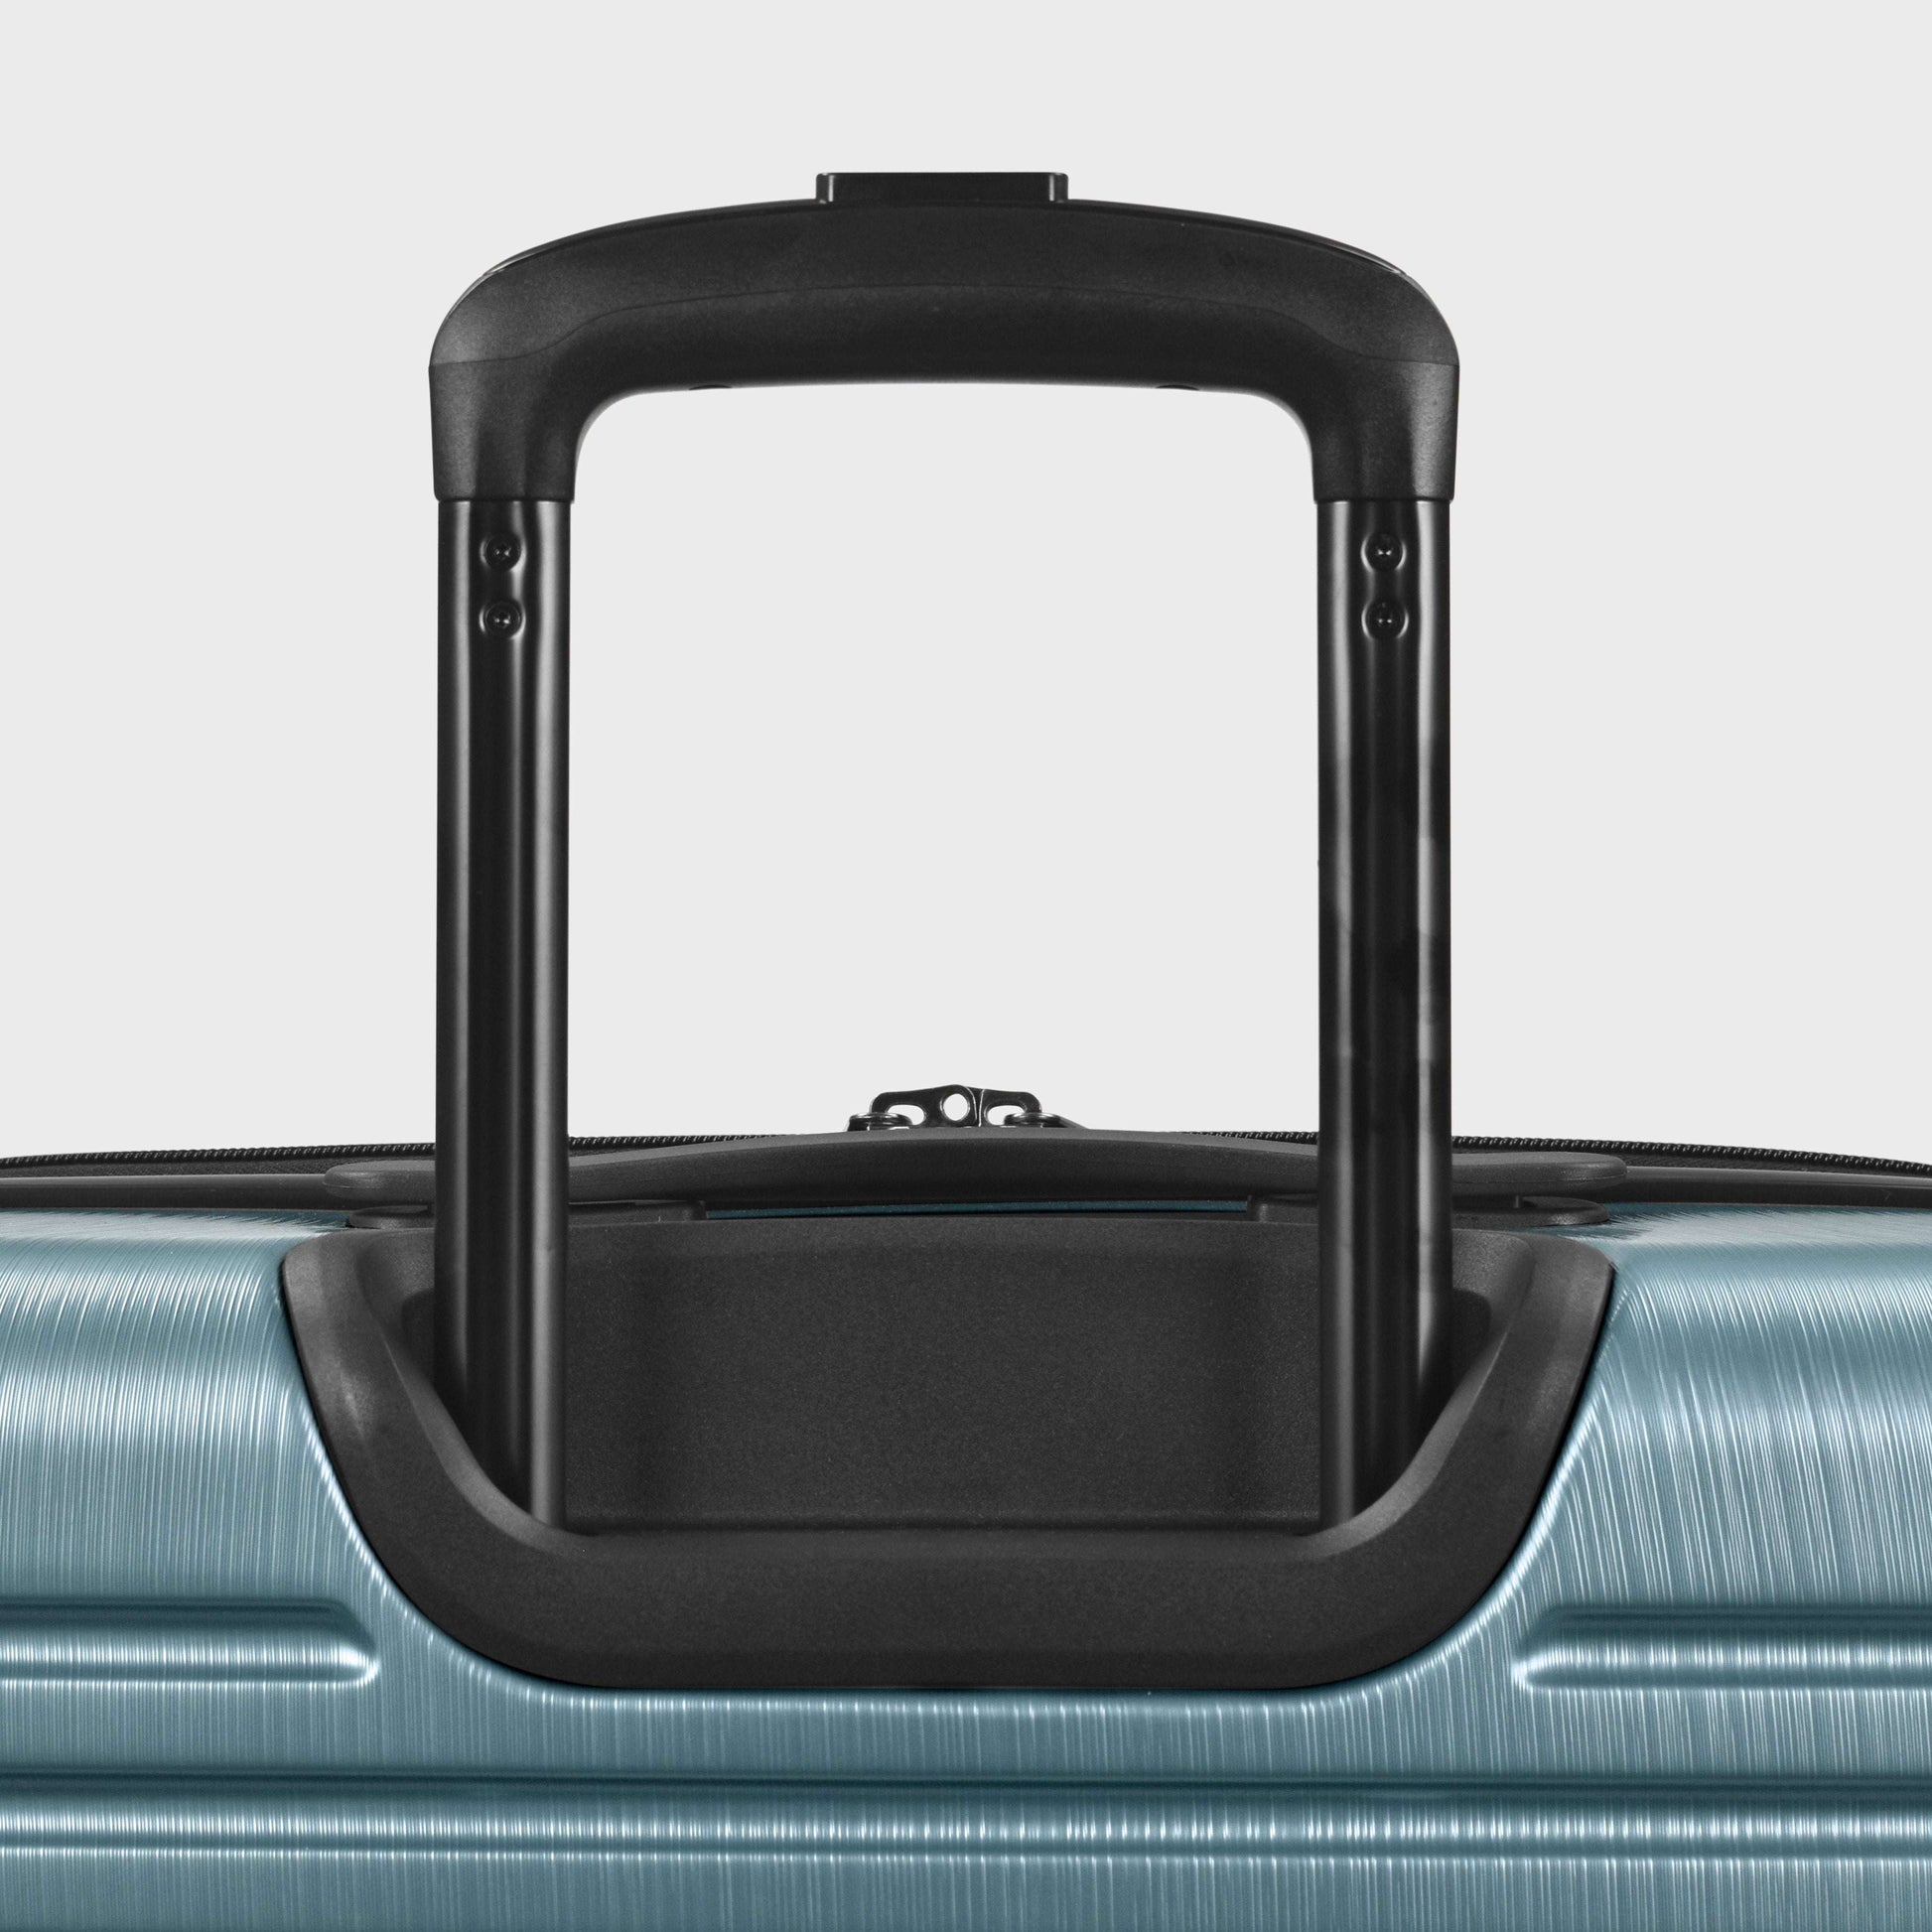 3 Pcs Hardside Spinner Luggage Set w/ Charging USB Port 22", 26", 30" 106 OK•PhotoFineArt OK•PhotoFineArt